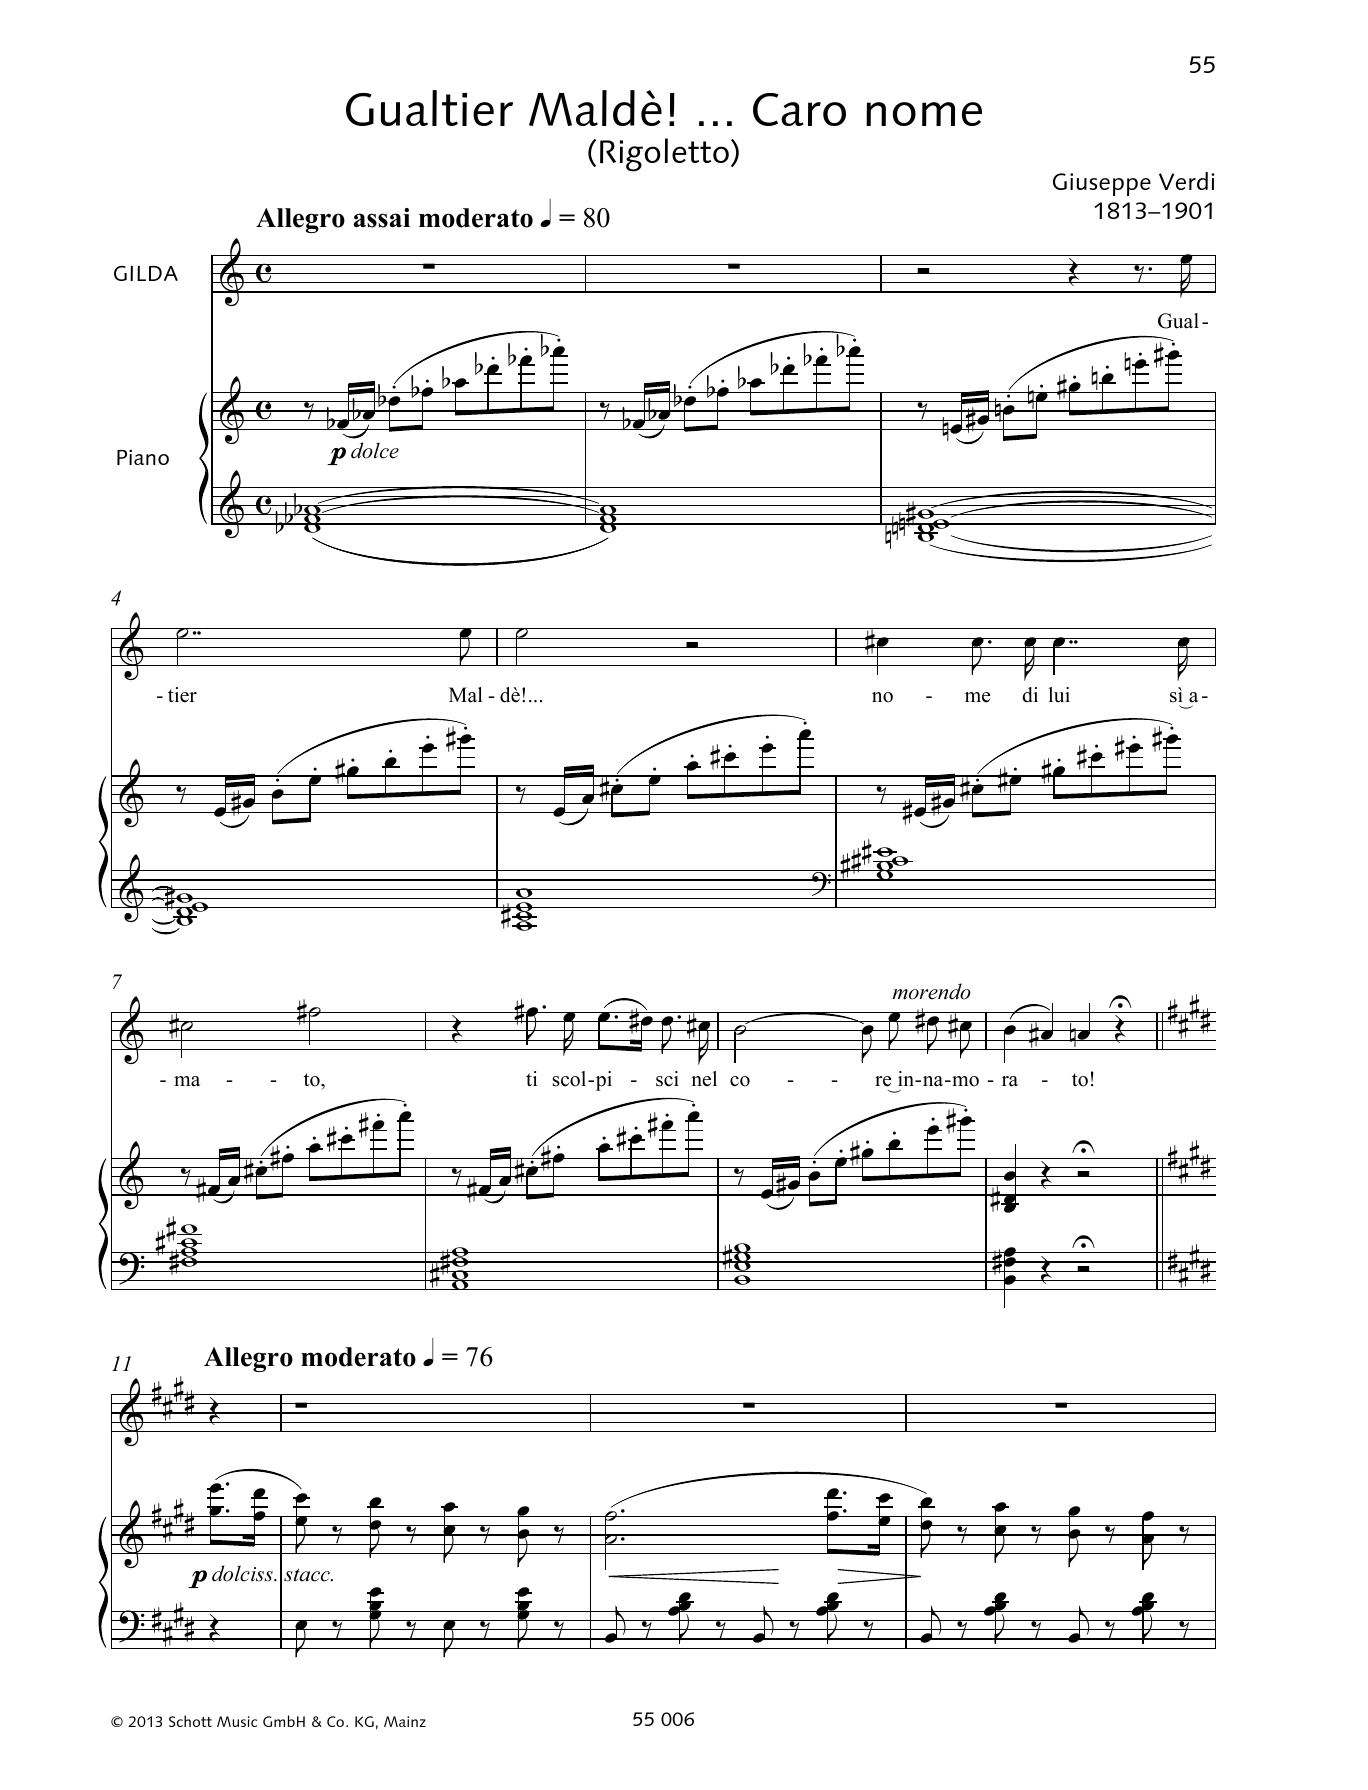 Download Giuseppe Verdi Gualtier Maldè!...Caro nome Sheet Music